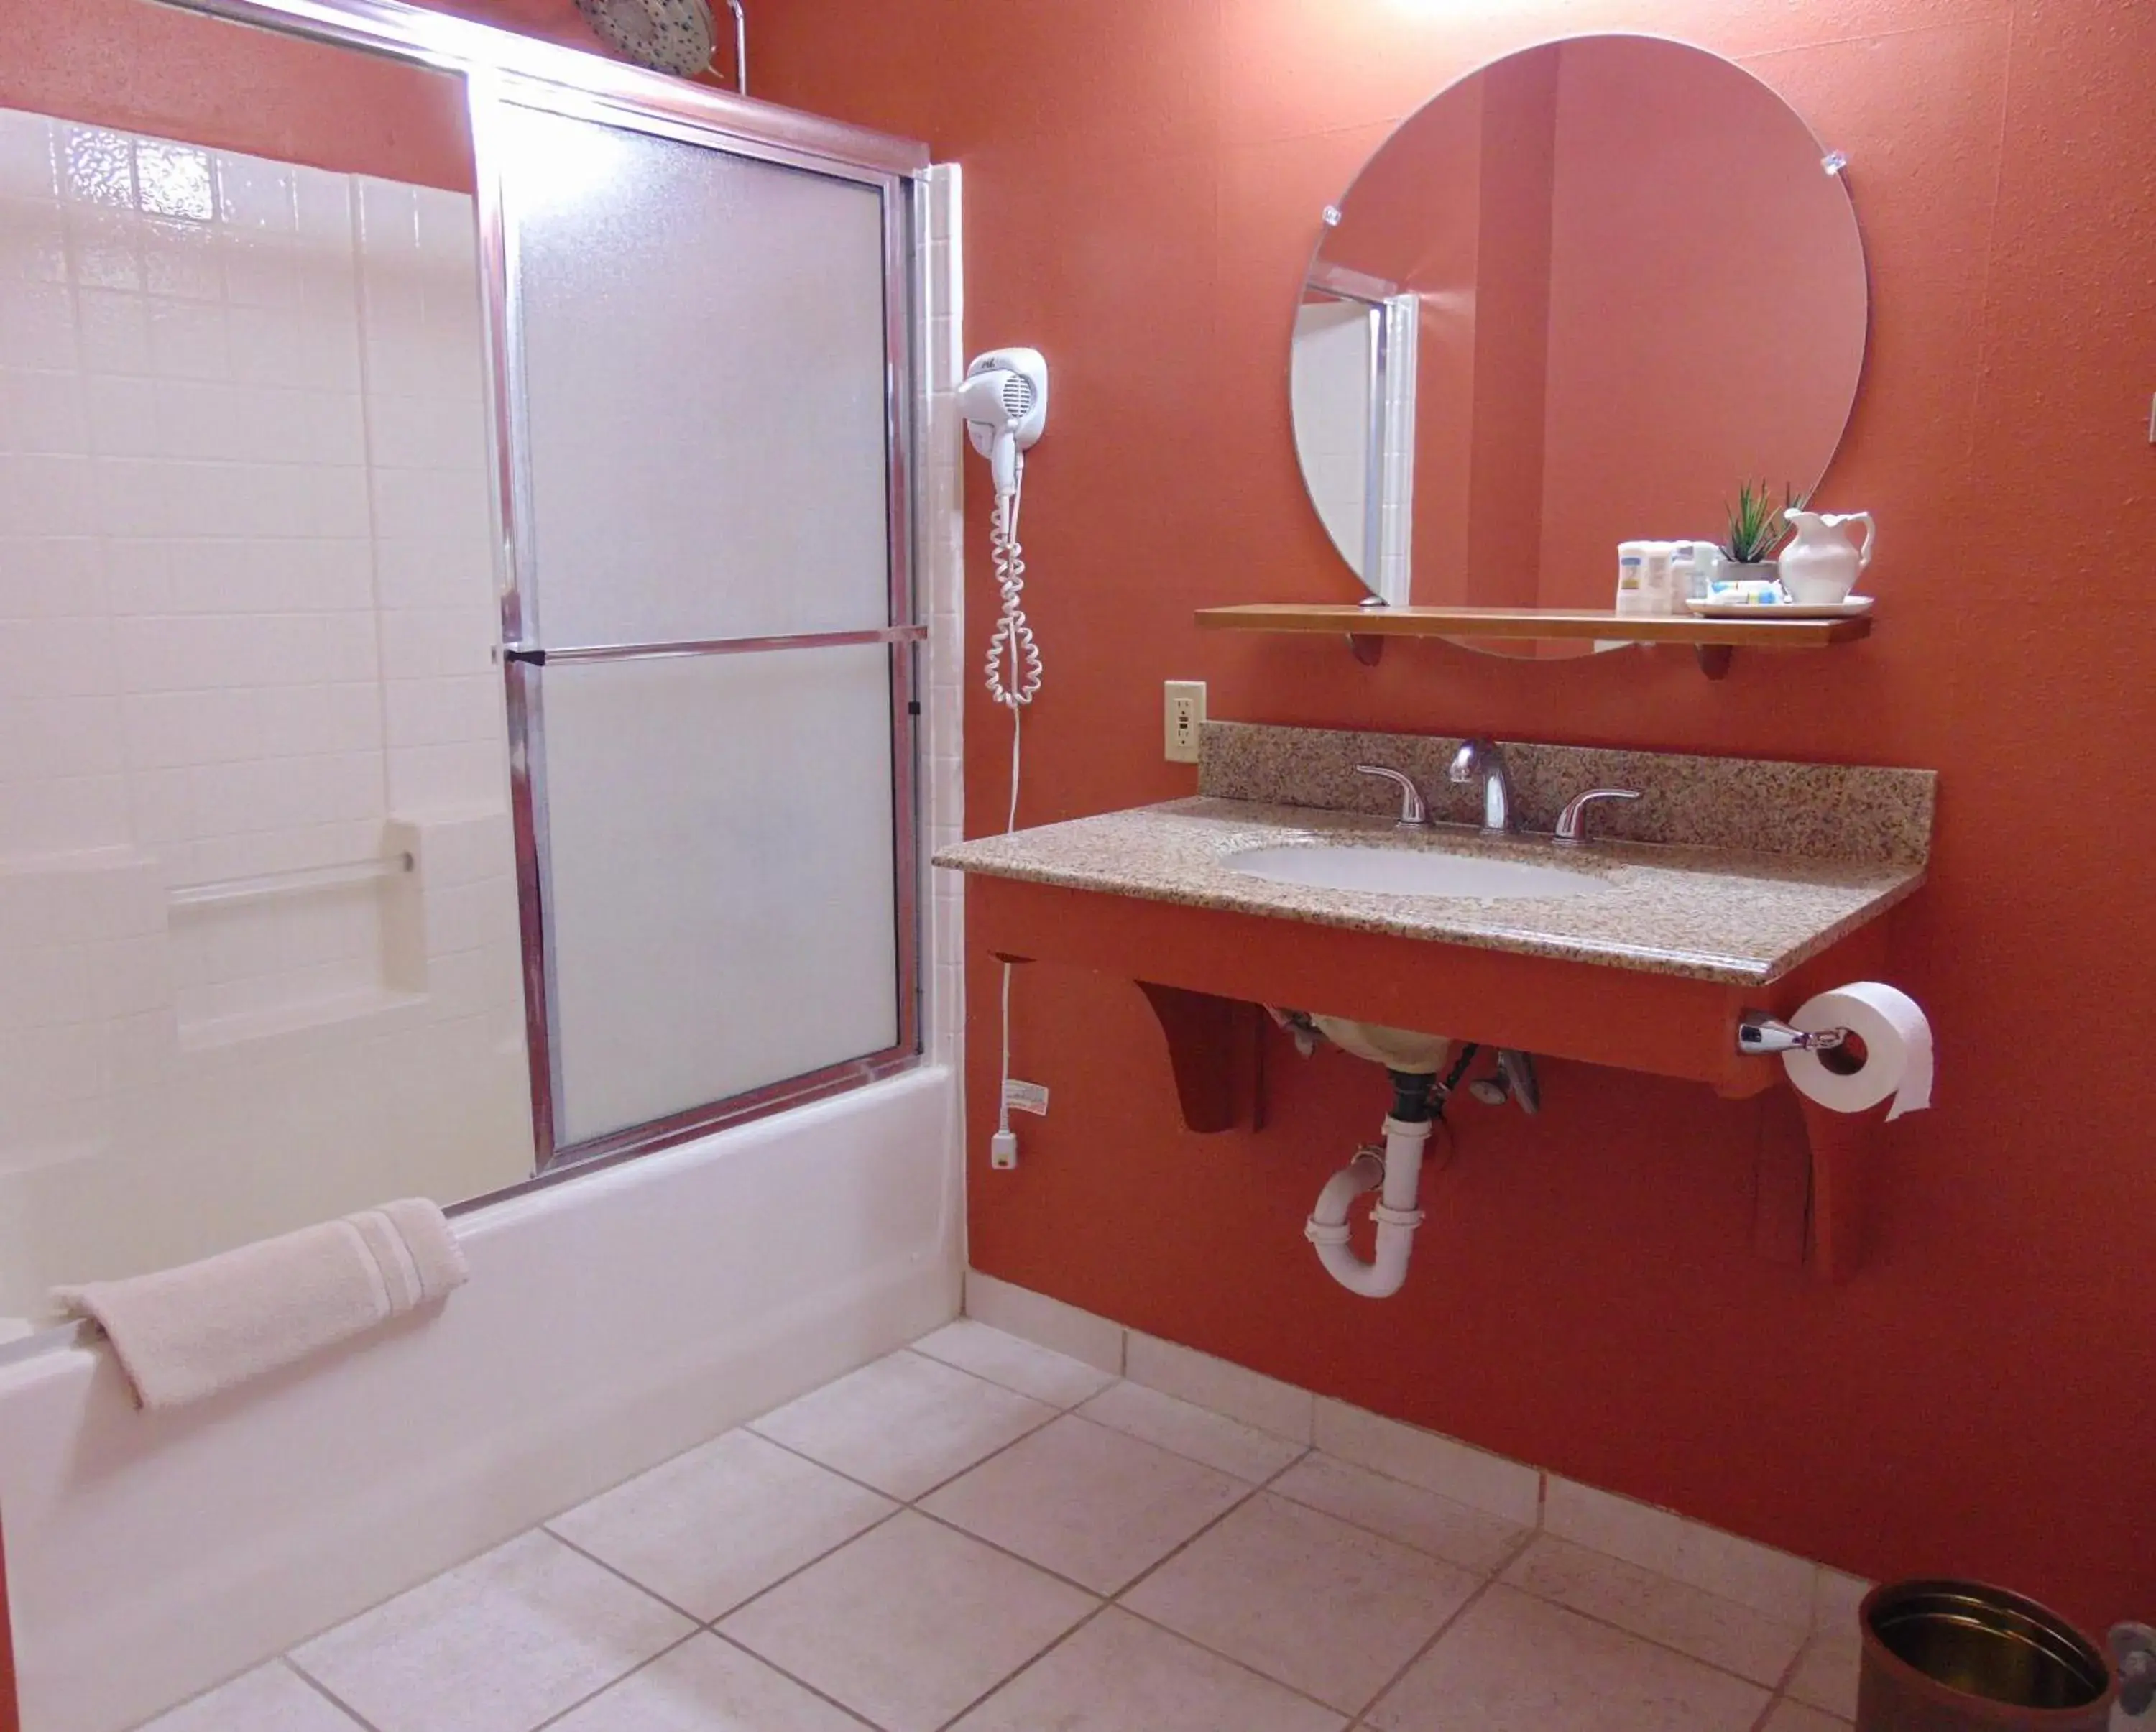 Bathroom in Bryce Canyon Resort